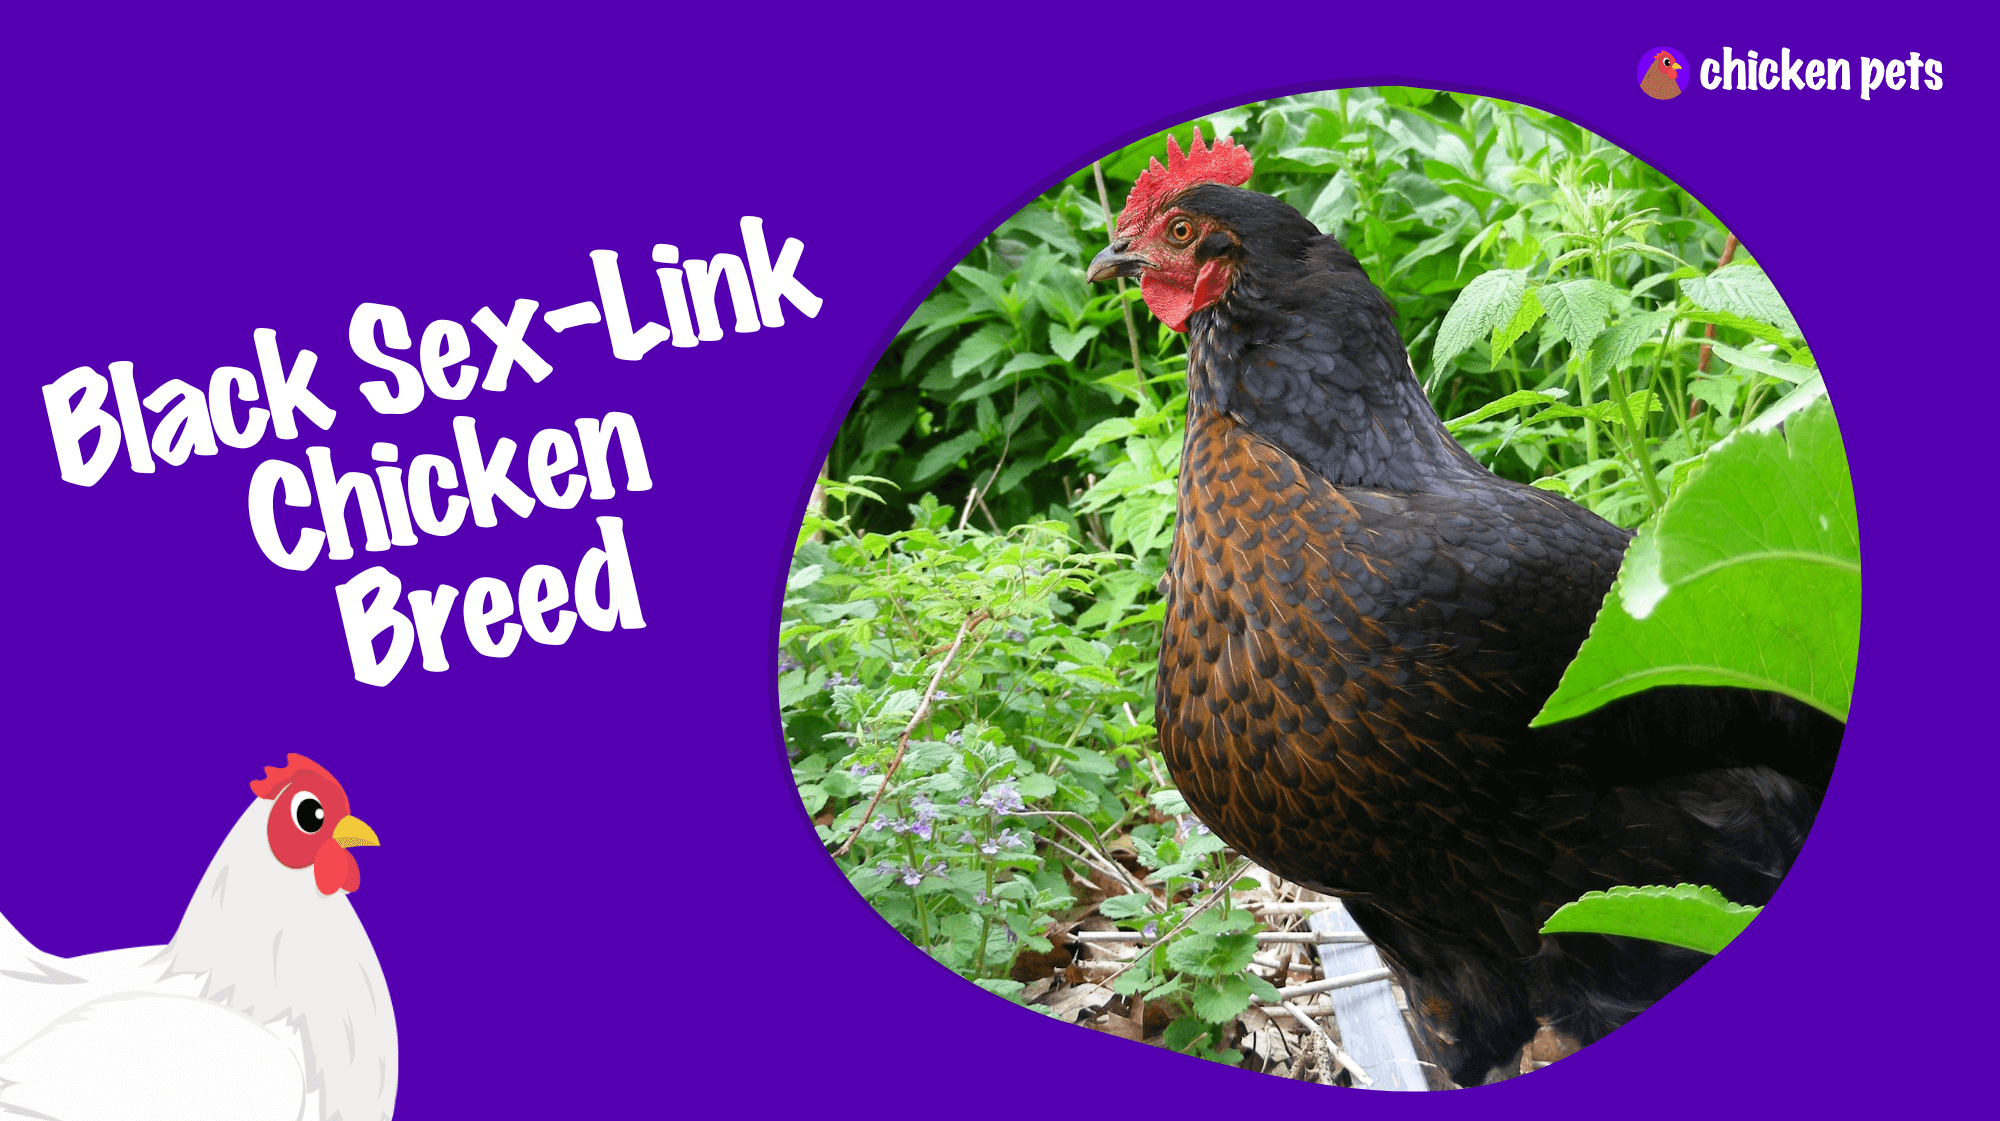 black sex link chicken breed